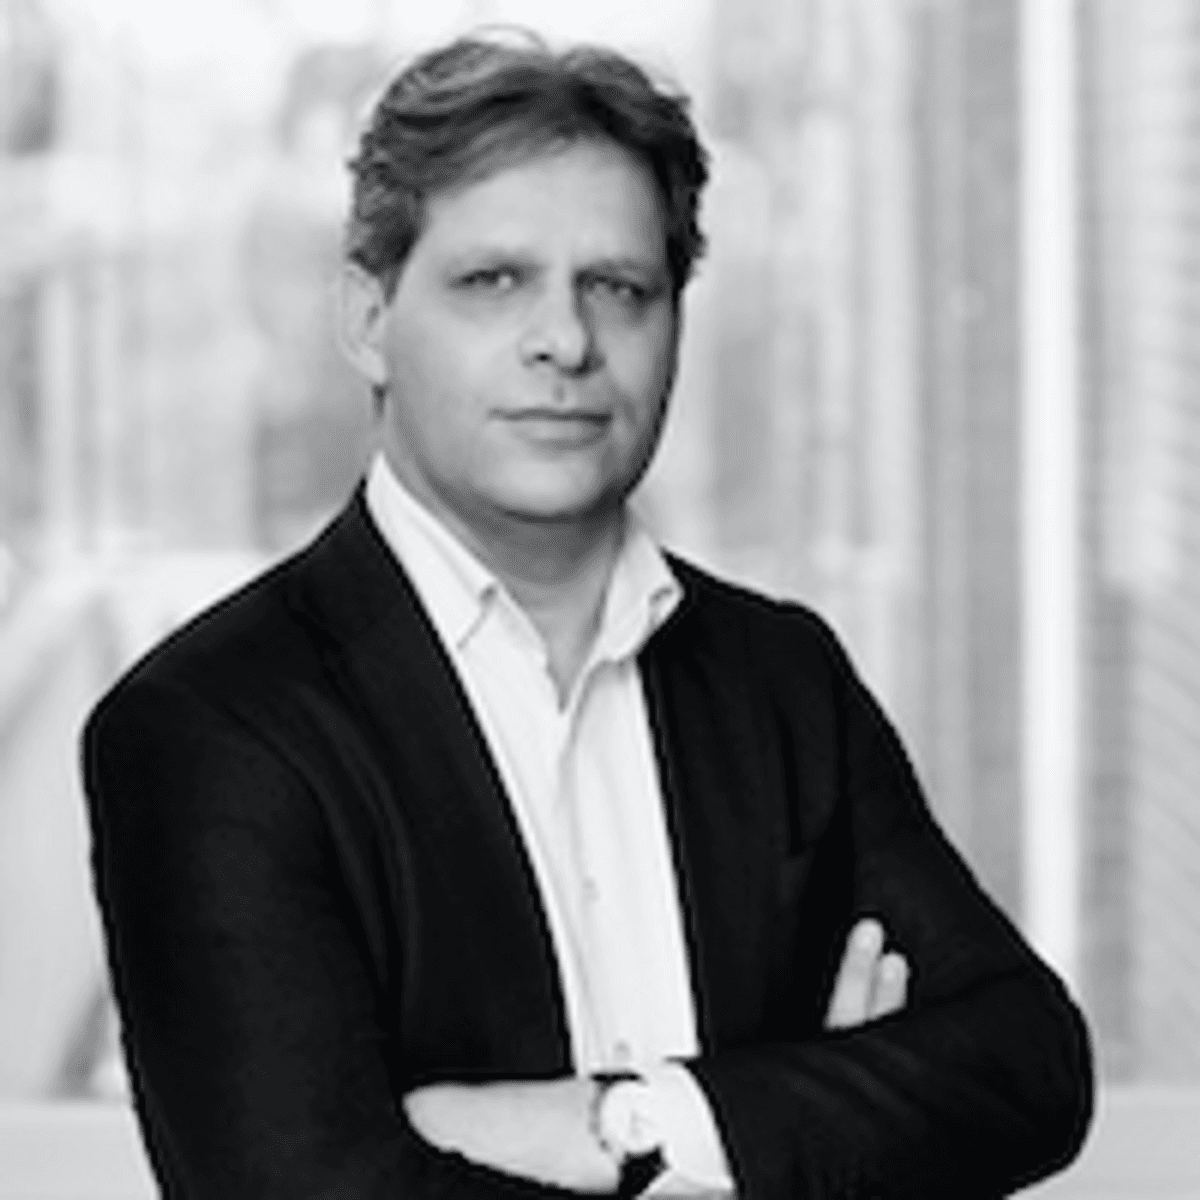 Eurofiber benoemt Chris Bakx tot managing director Group Marketing image